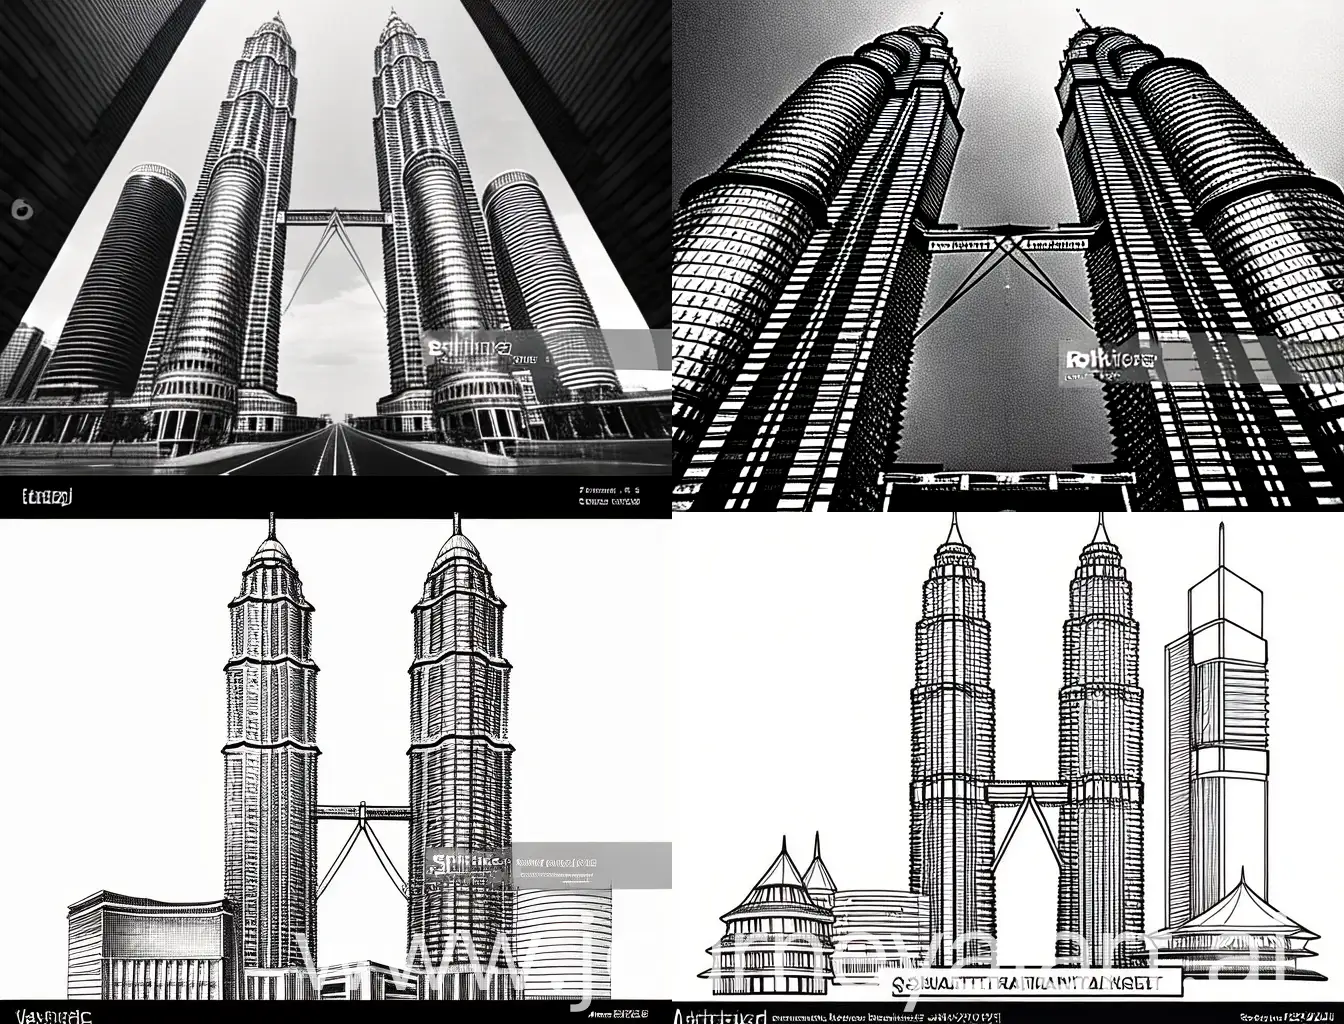 Iconic-Kuala-Lumpur-Landmarks-Illustrative-Depictions-of-Petronas-Twin-Towers-Menara-Kuala-Lumpur-Tower-Masjid-Negara-Georgetown-and-Kek-Lok-Si-Temple